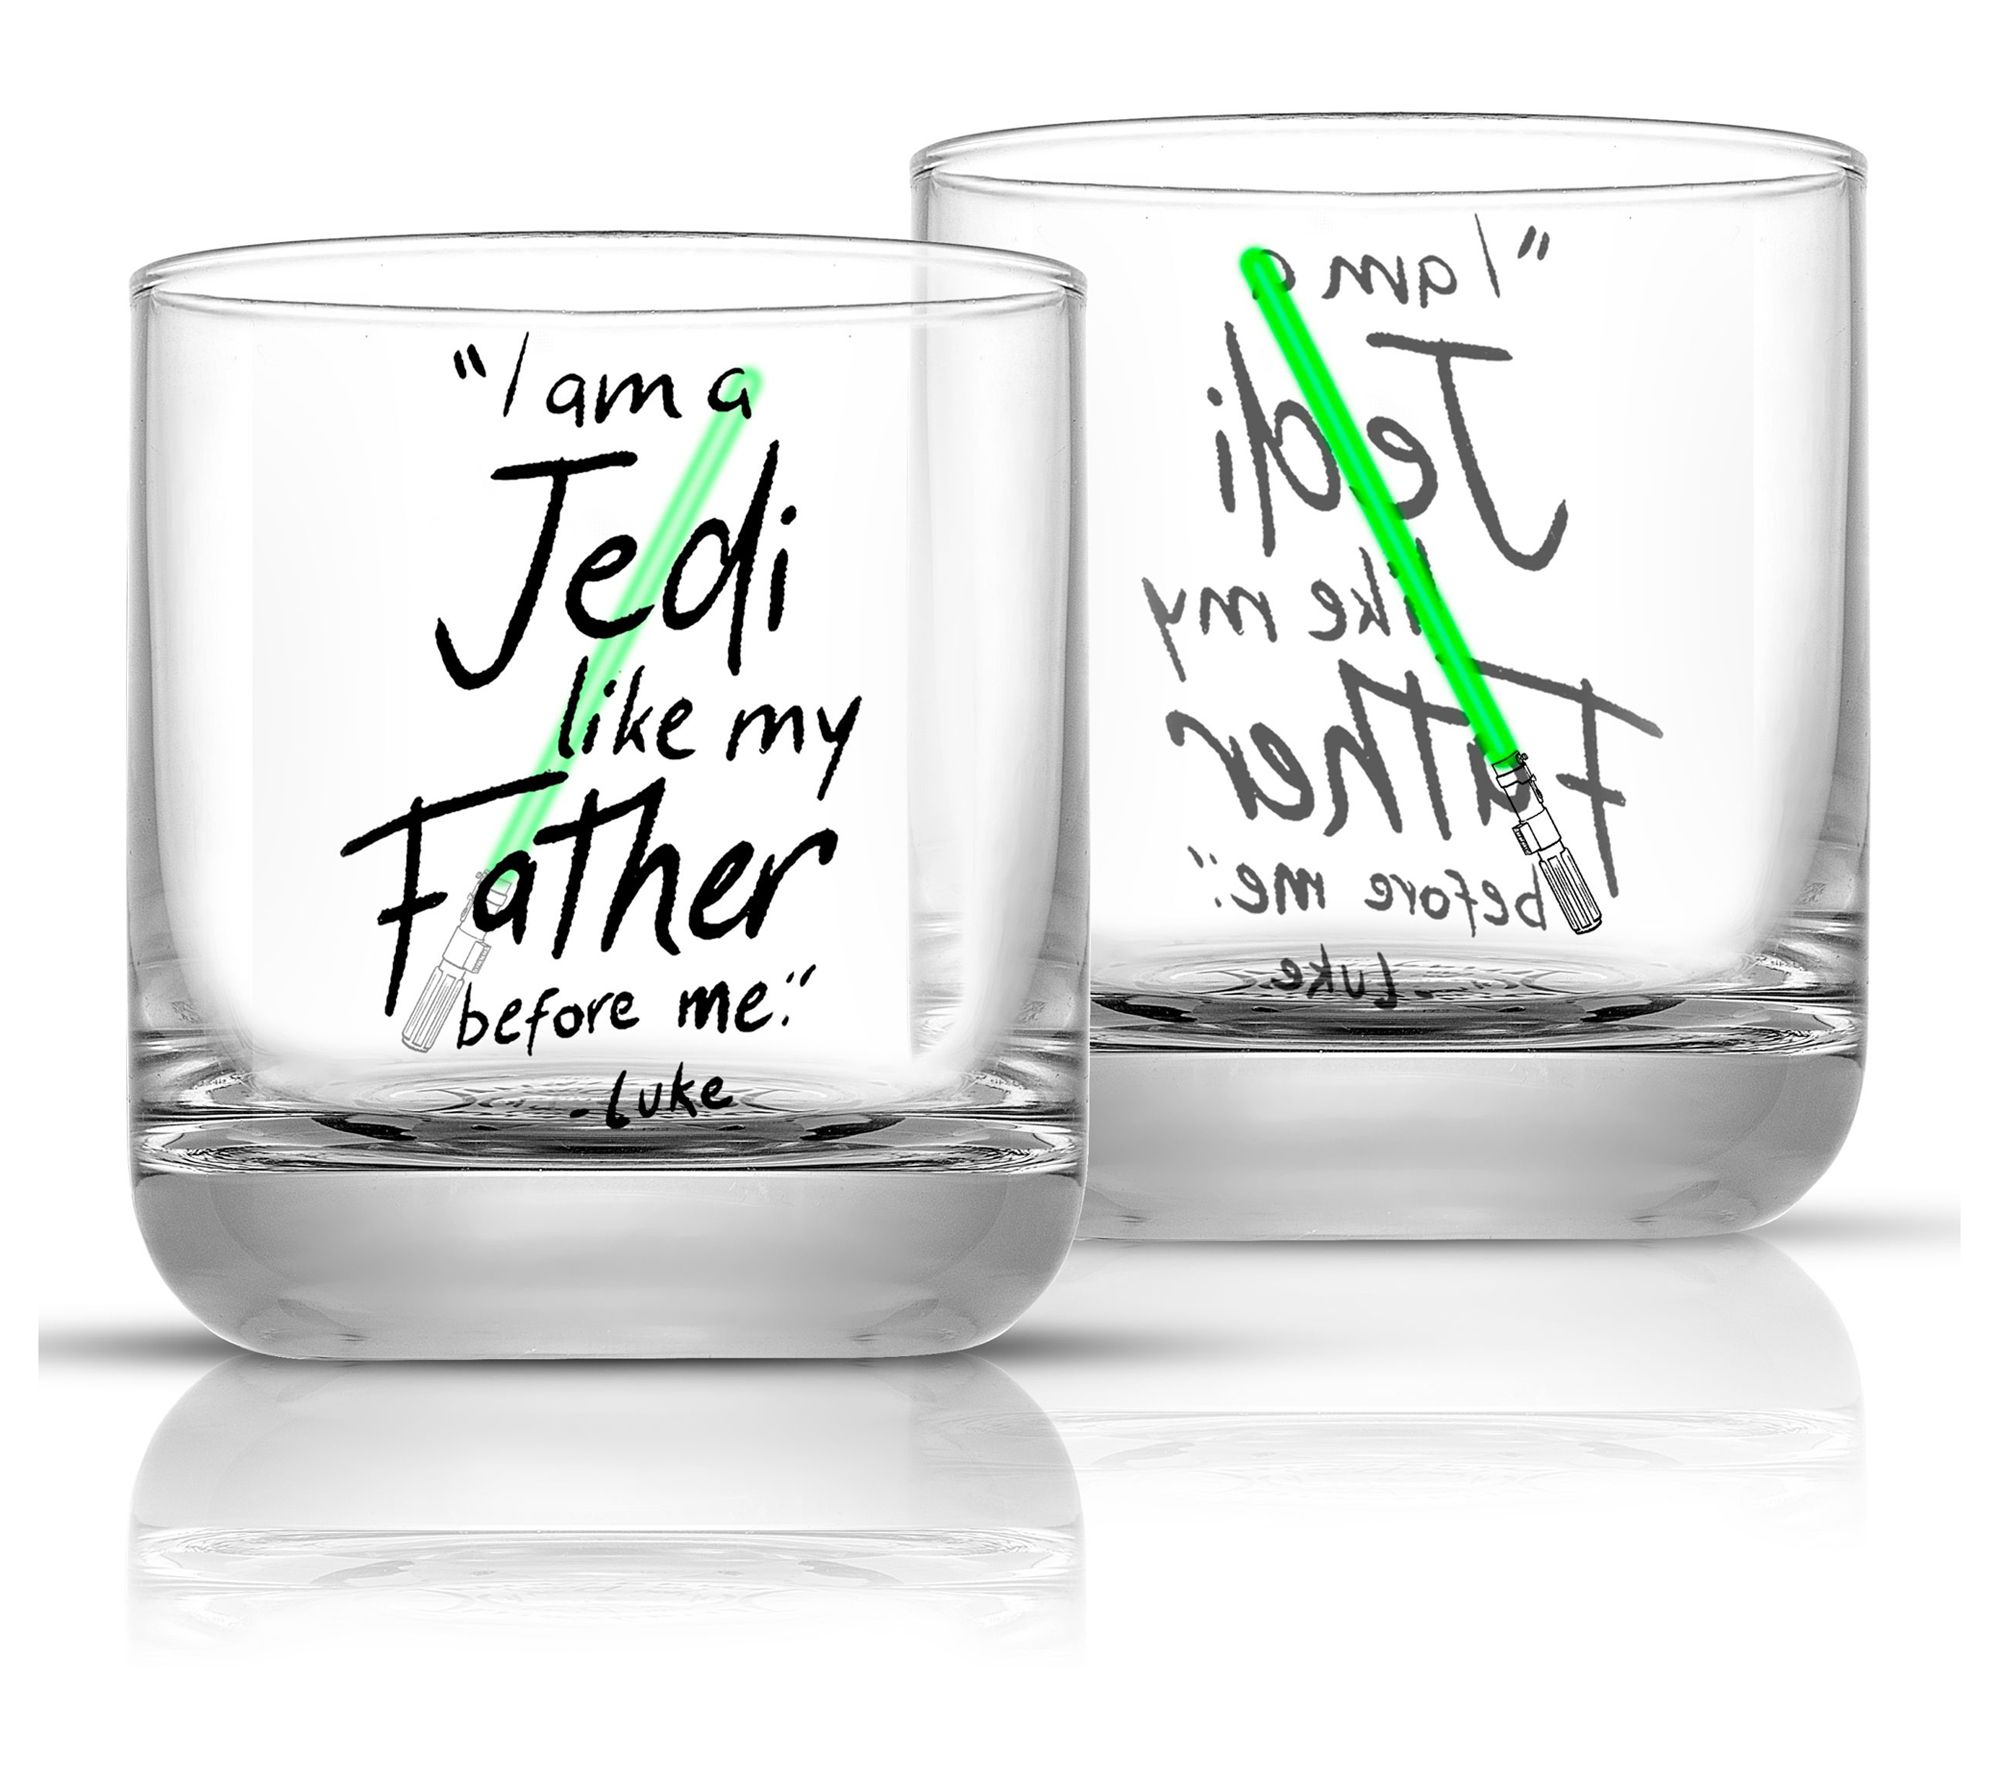 JoyJolt Star Wars Obi-Wan Kenobi Lightsaber Stemless Drinking Glass - 15 oz - Set of 2